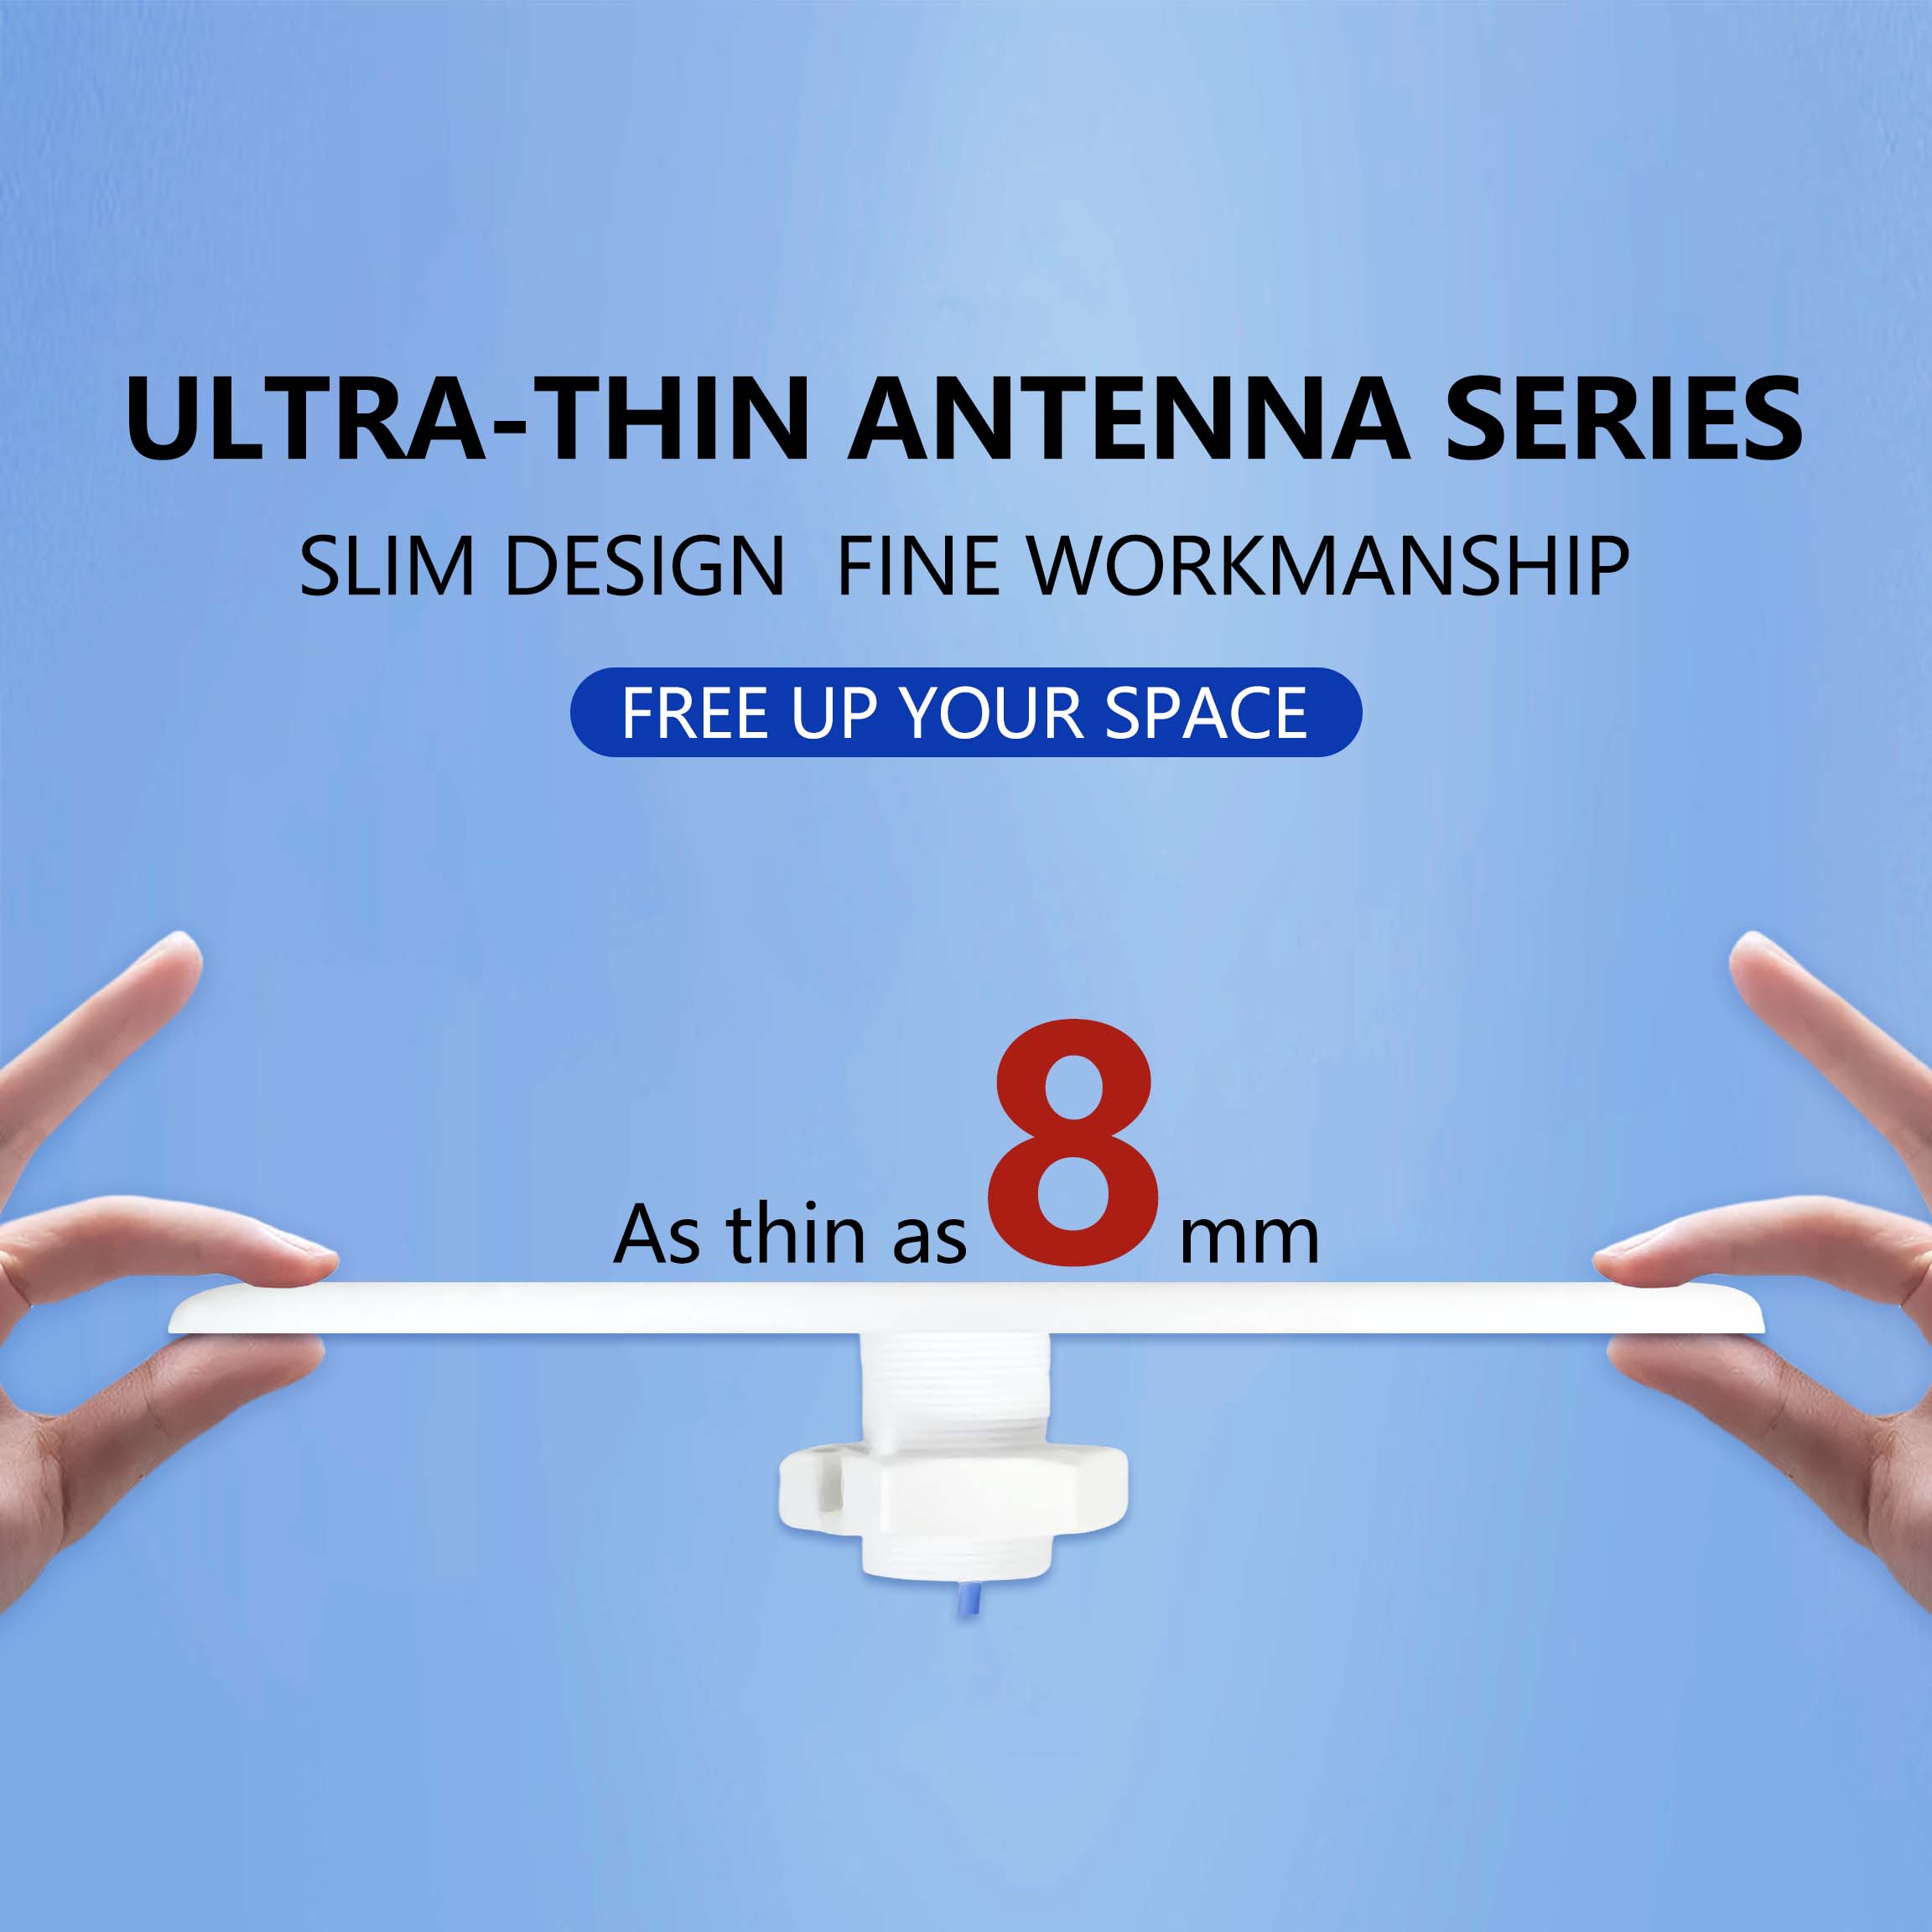 Ultra-thin antenna series